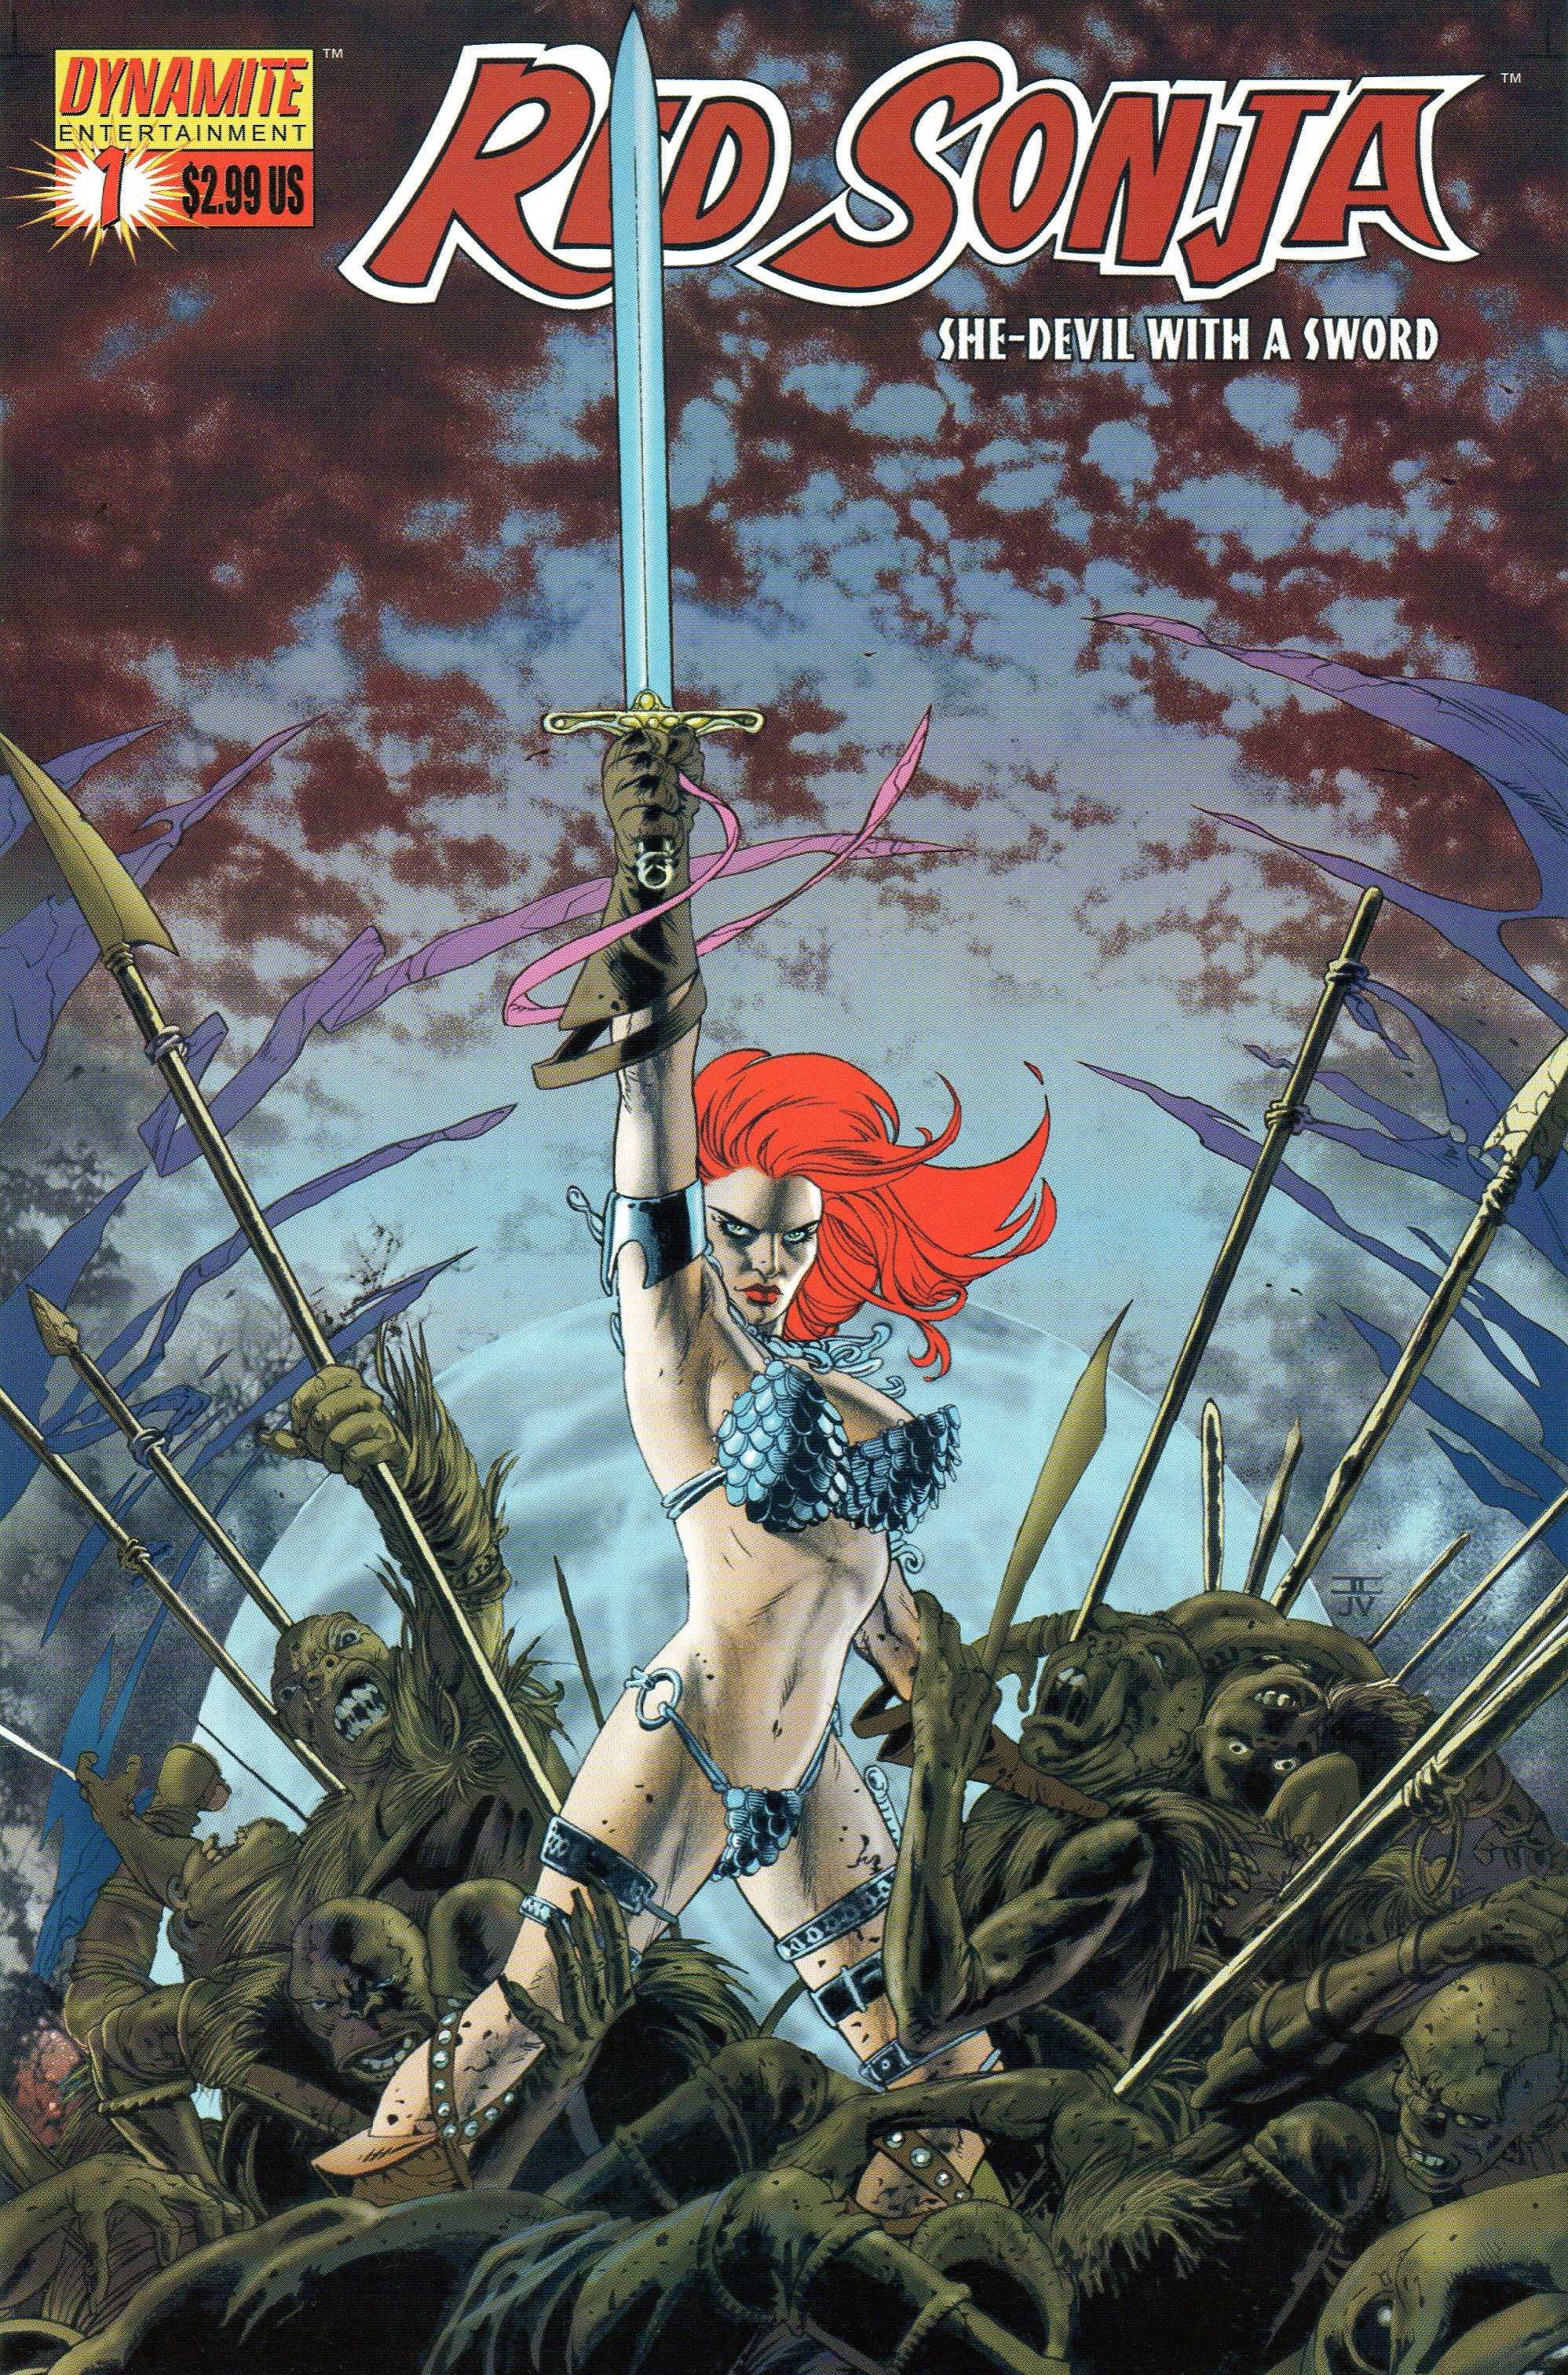 Red Sonja She - Devil with a sword #1 mai multe titluri benzi desenate